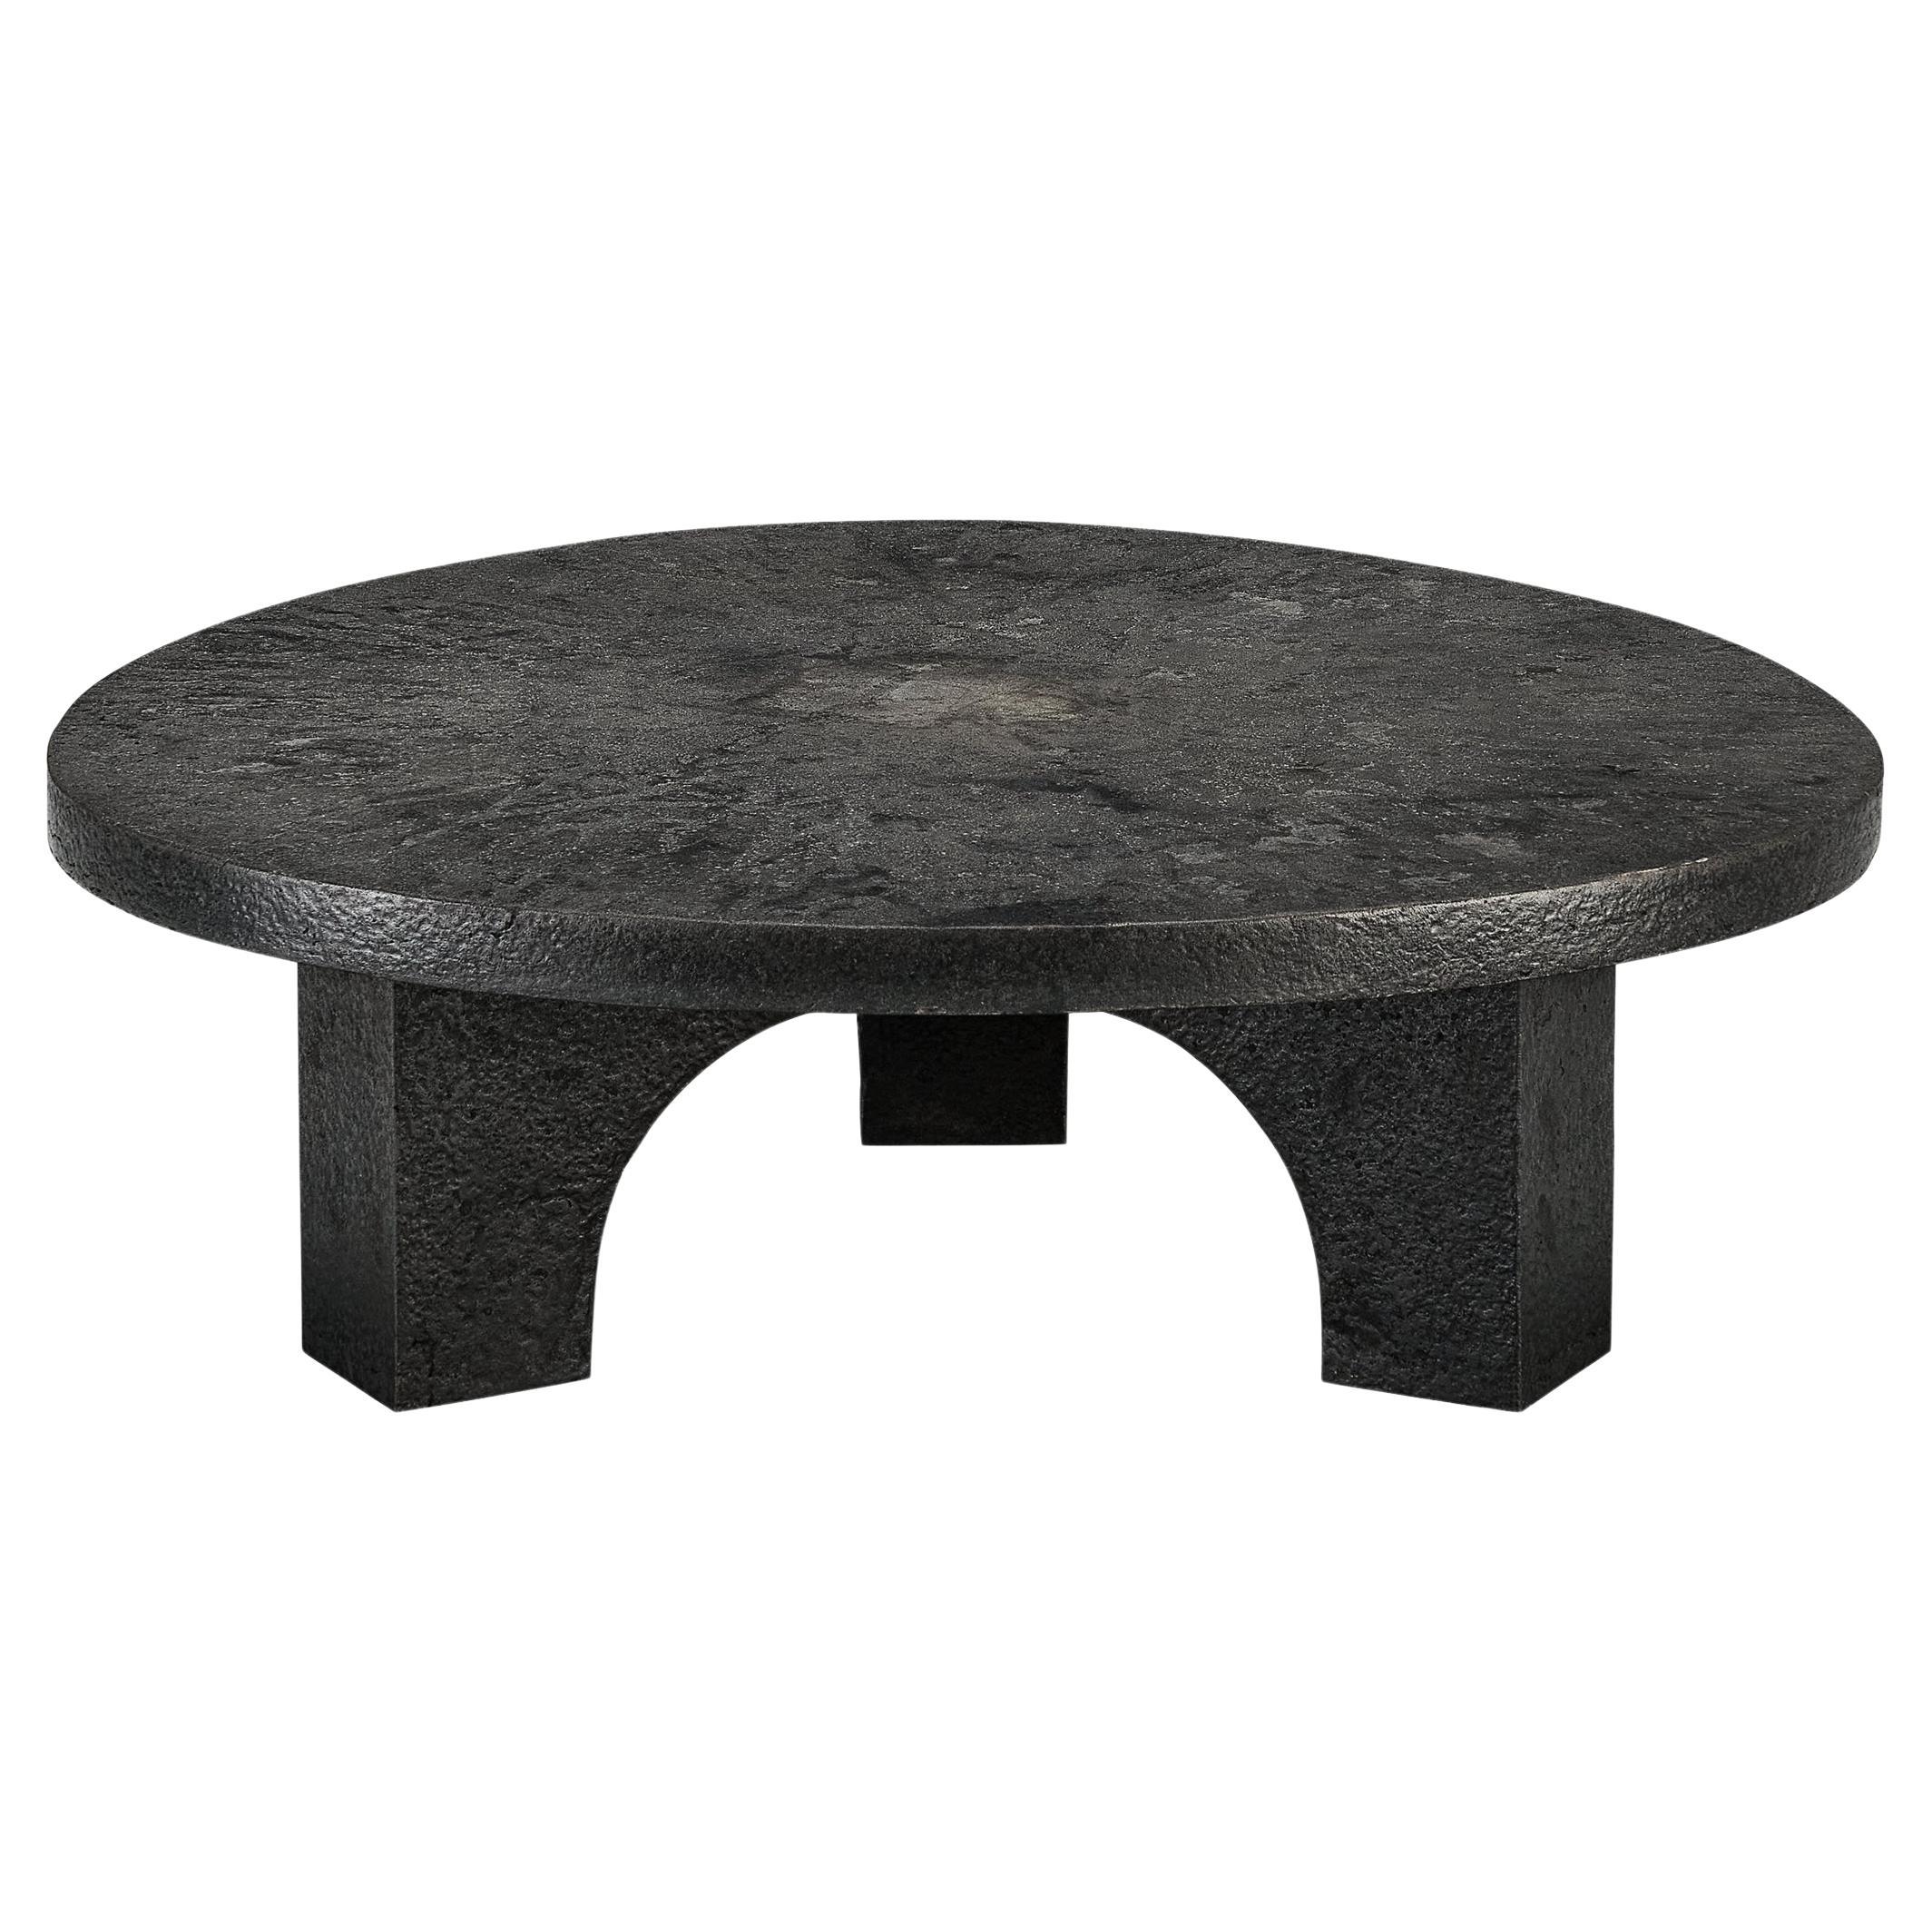 Brutalist Round Coffee Table in Dark Grey Stone Look 